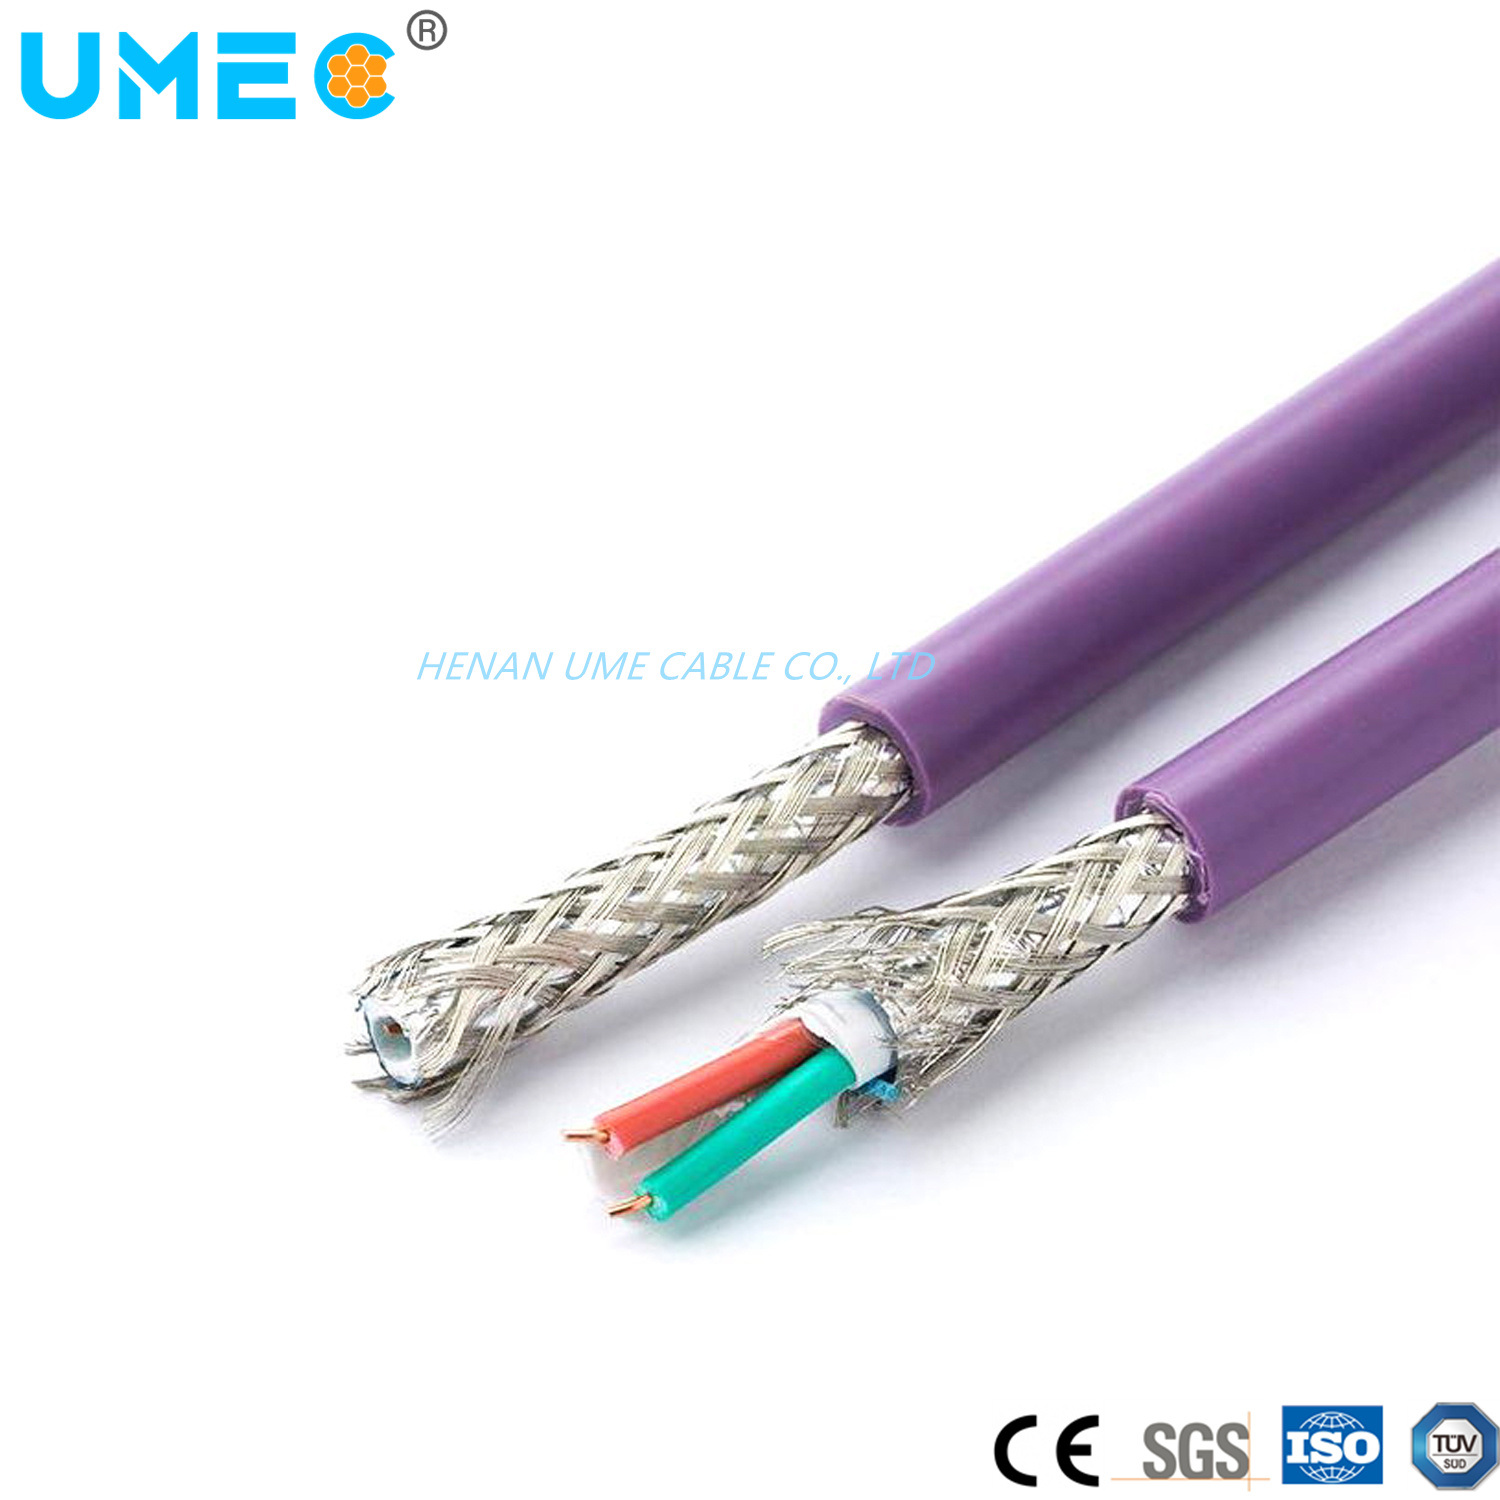 China 
                Cable de comunicación LV Silicon-Free China LV Bus Dp1830-0Violeta 6xv eh10 Los fabricantes de cable y proveedores
              fabricante y proveedor